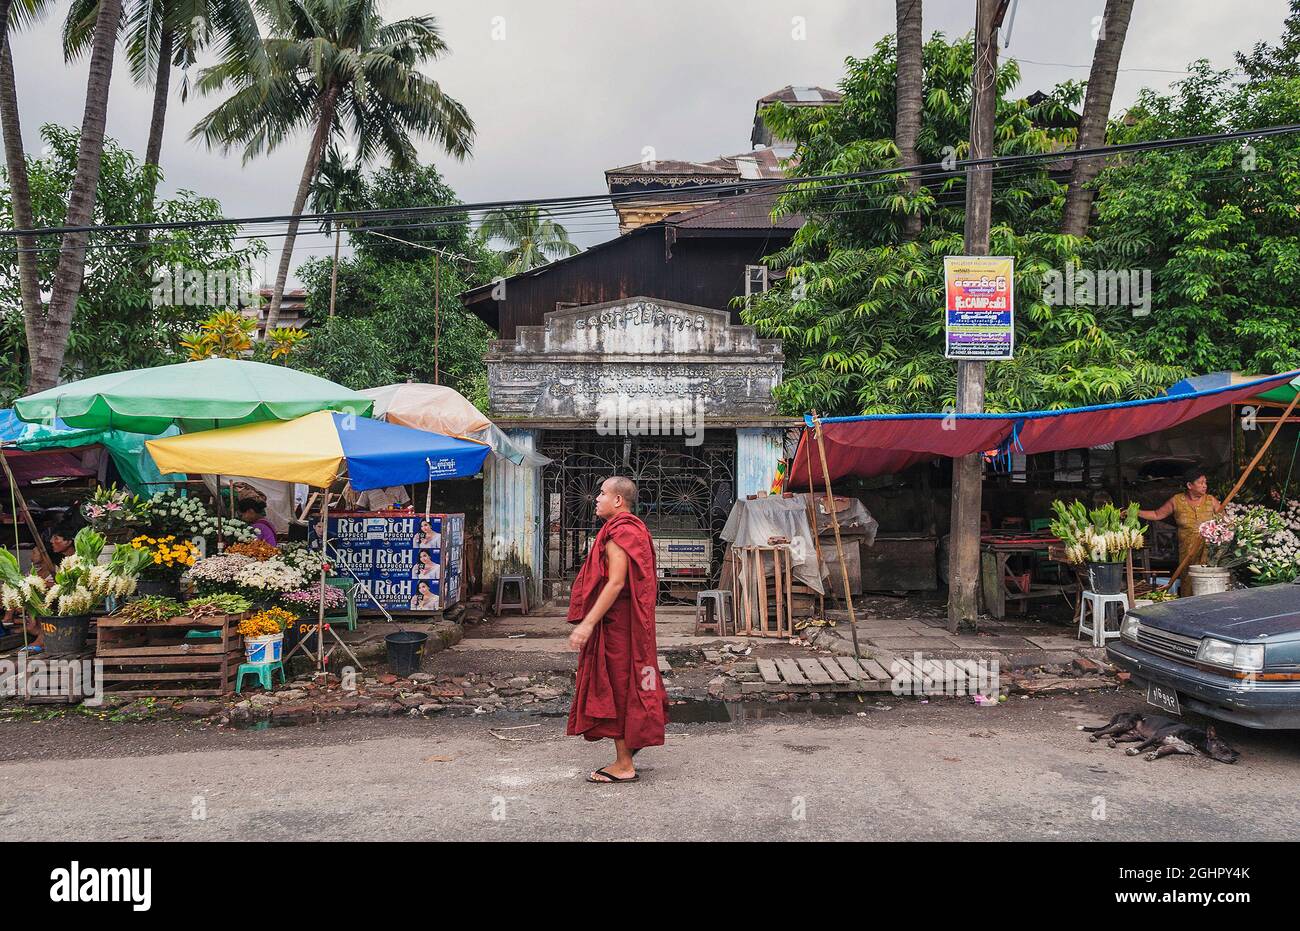 daytime street scene in downtown central yangon city myanmar Stock Photo